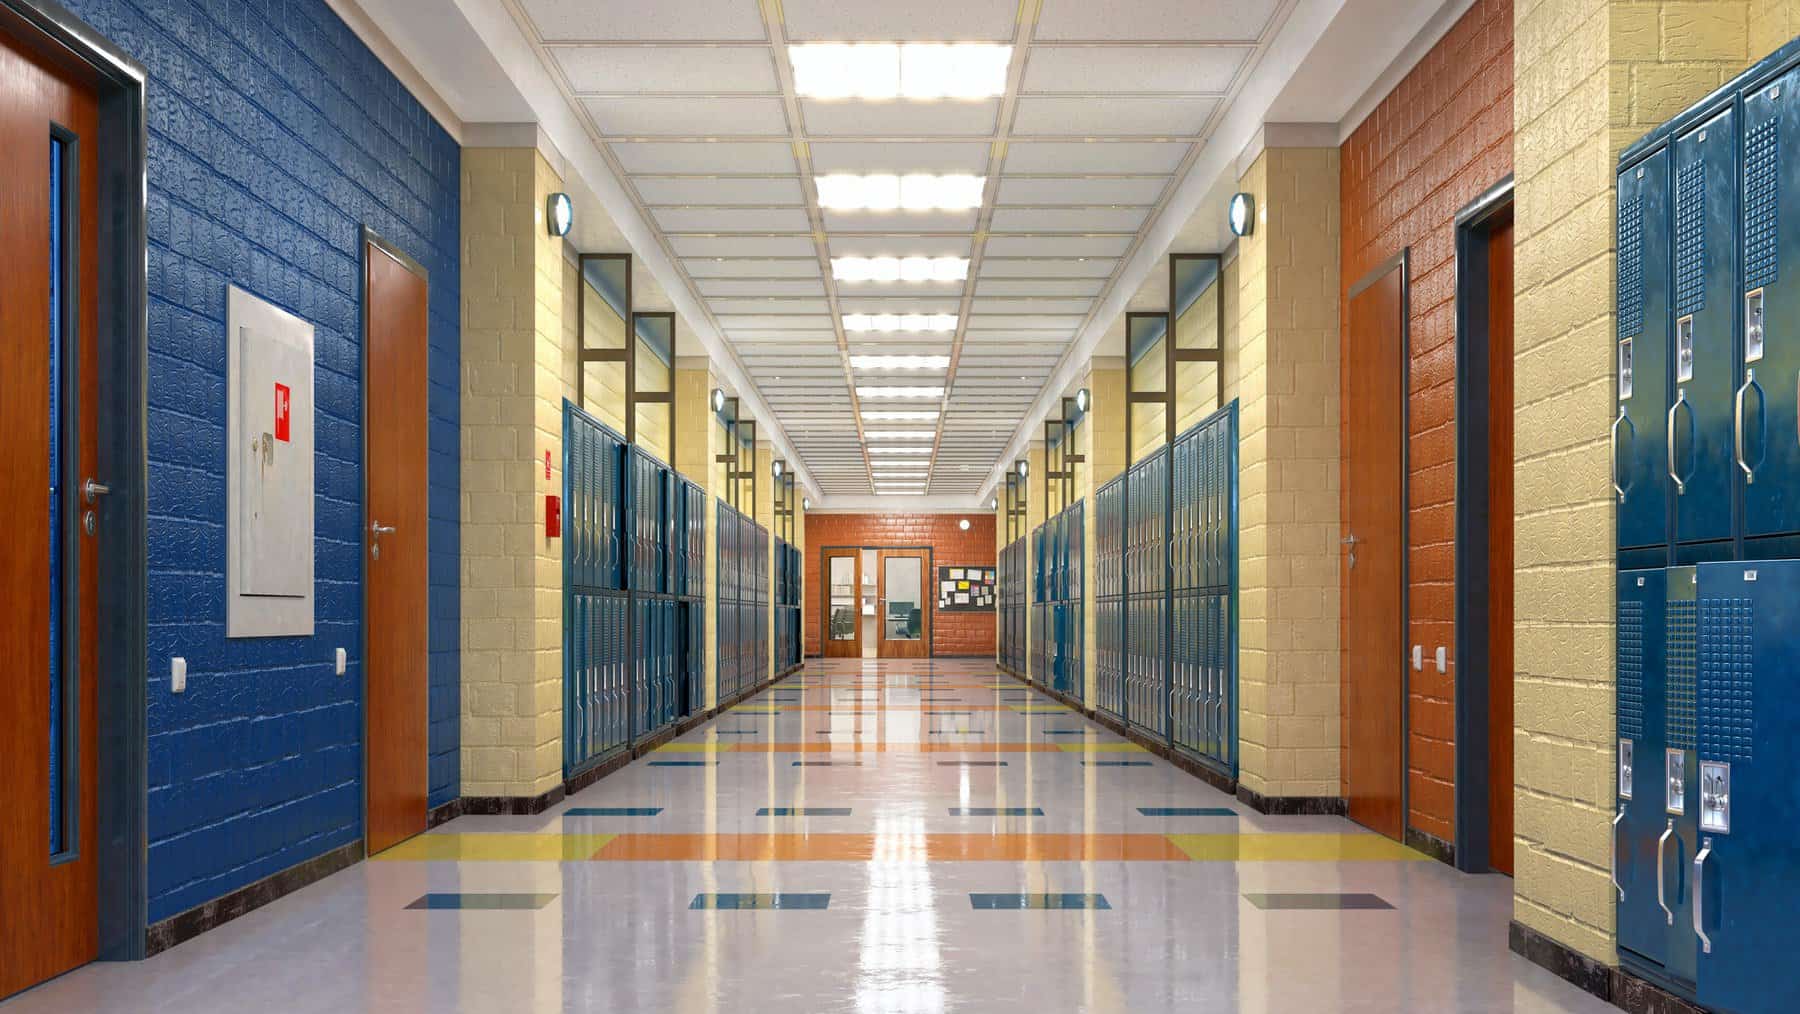 Hallway of a school- Commercial Interior Painters in cornelius nc